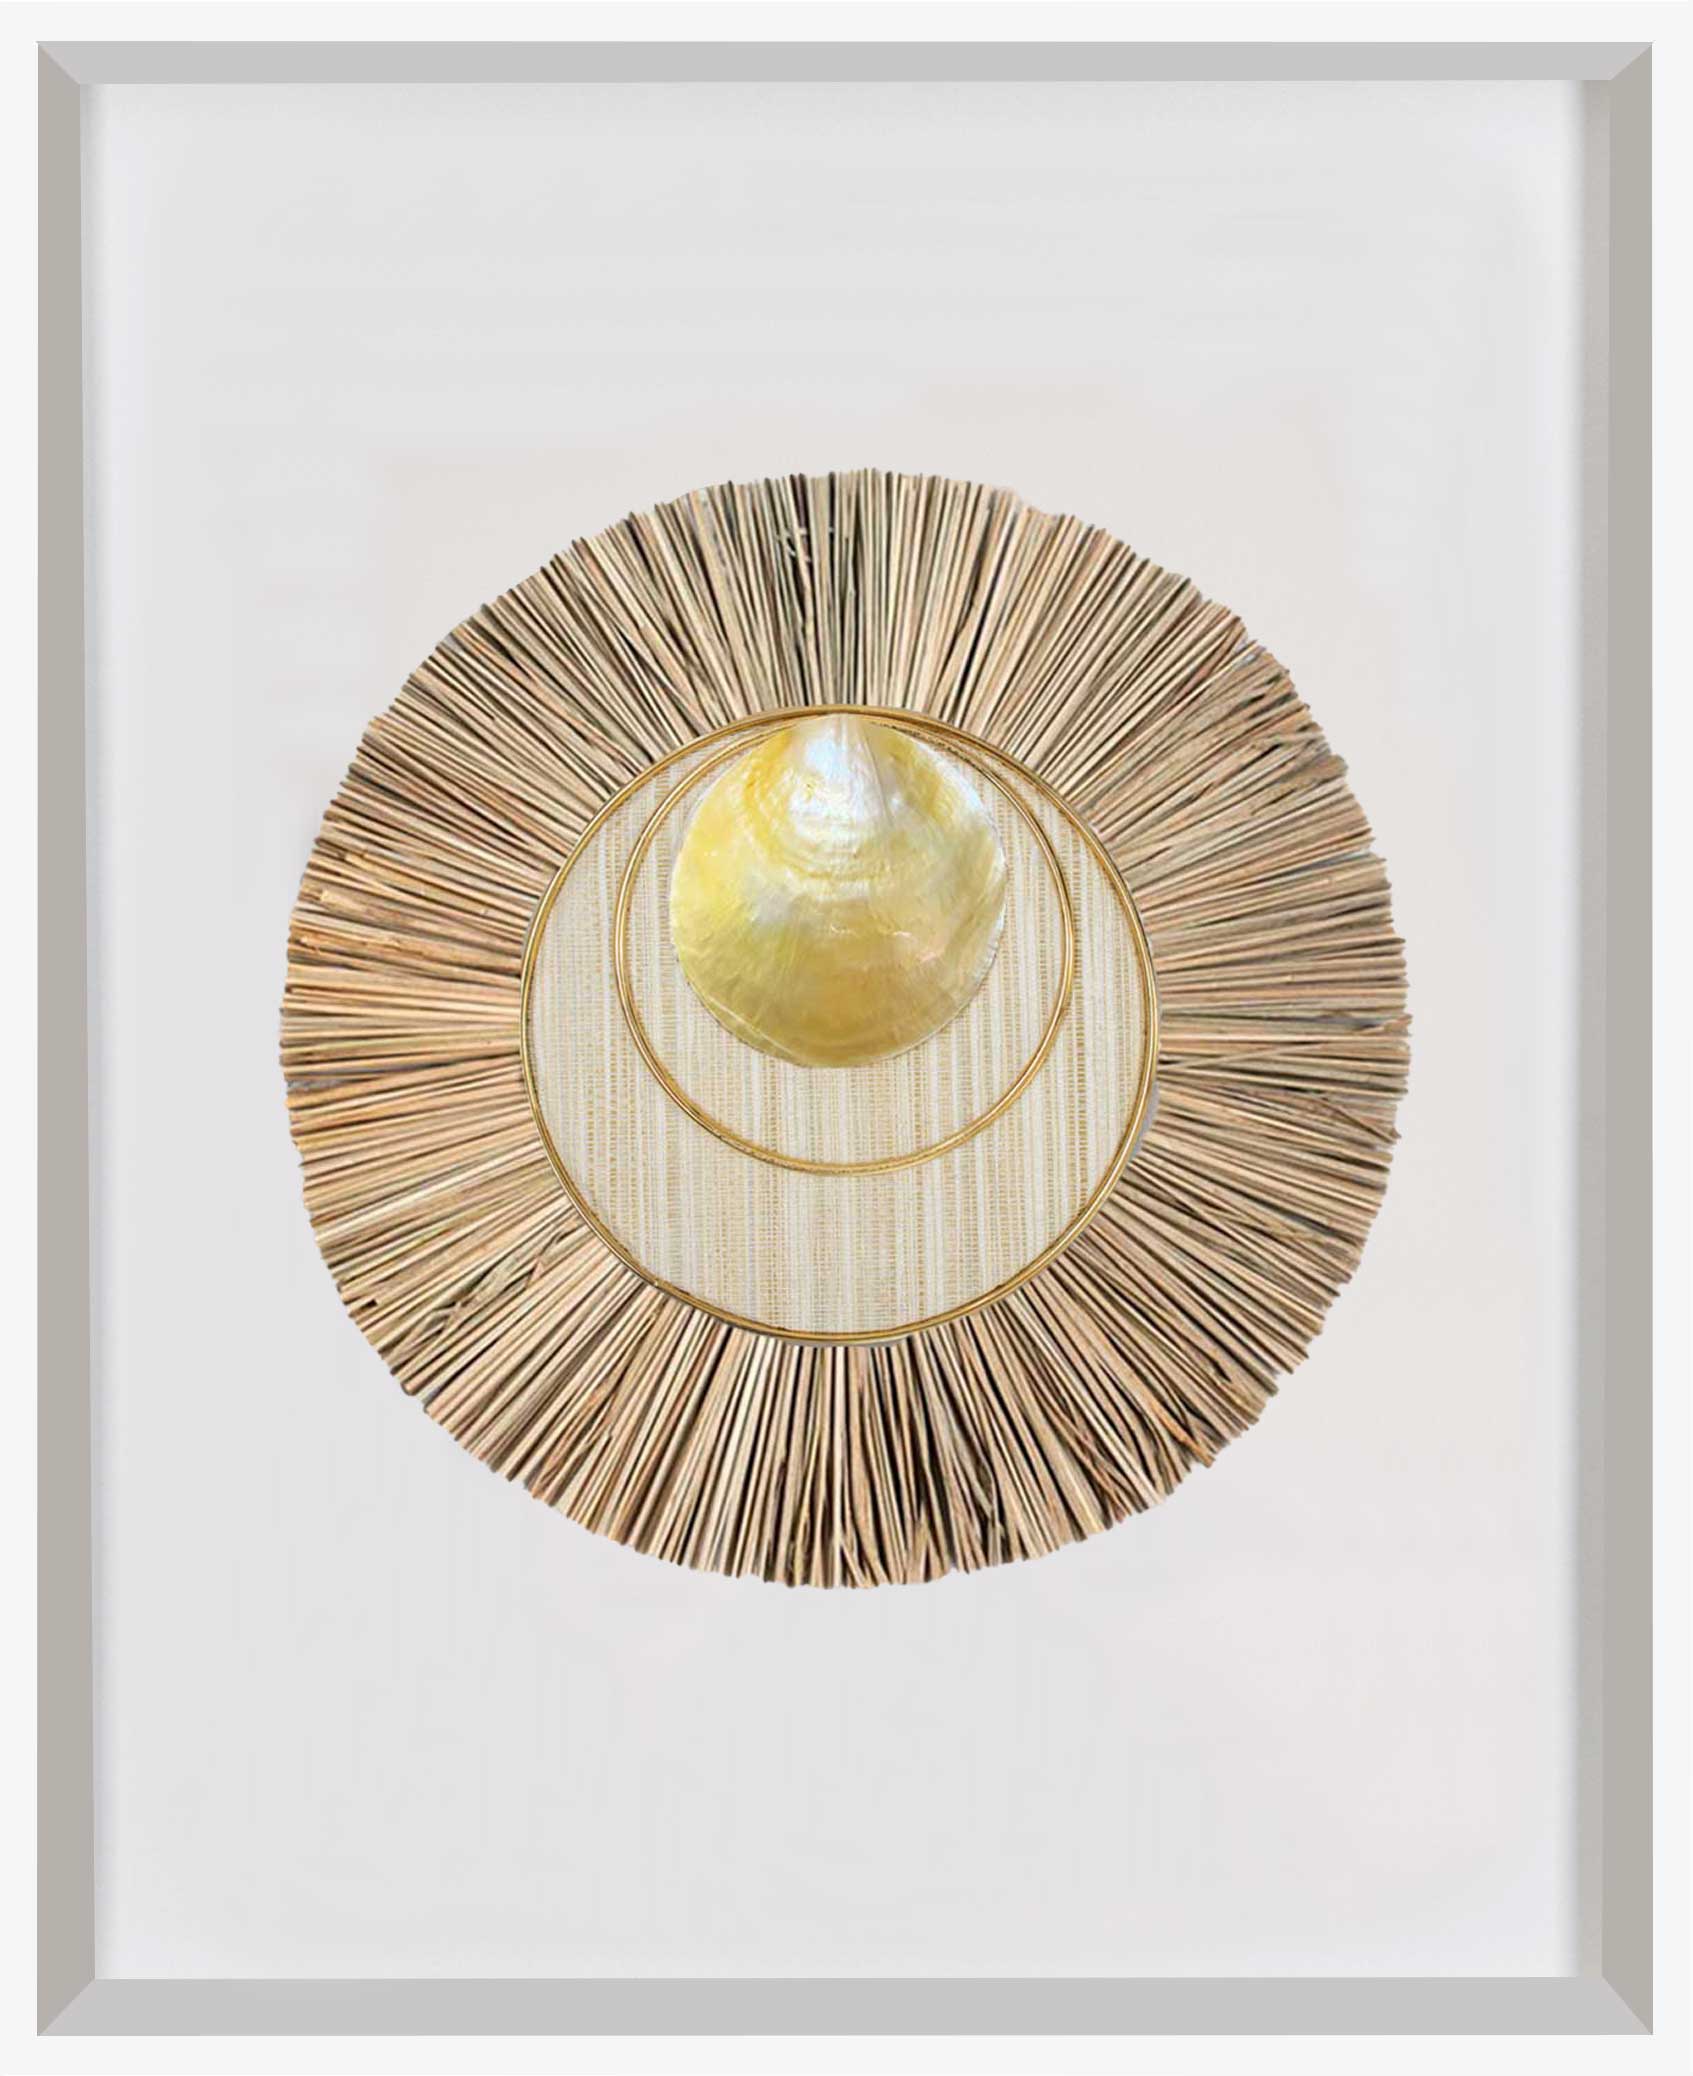 Bandhini Homewear Design Artwork White Frame / 67 x 85 cm African Shell Disc and Wood Sticks Artwork 67 x 85 cm